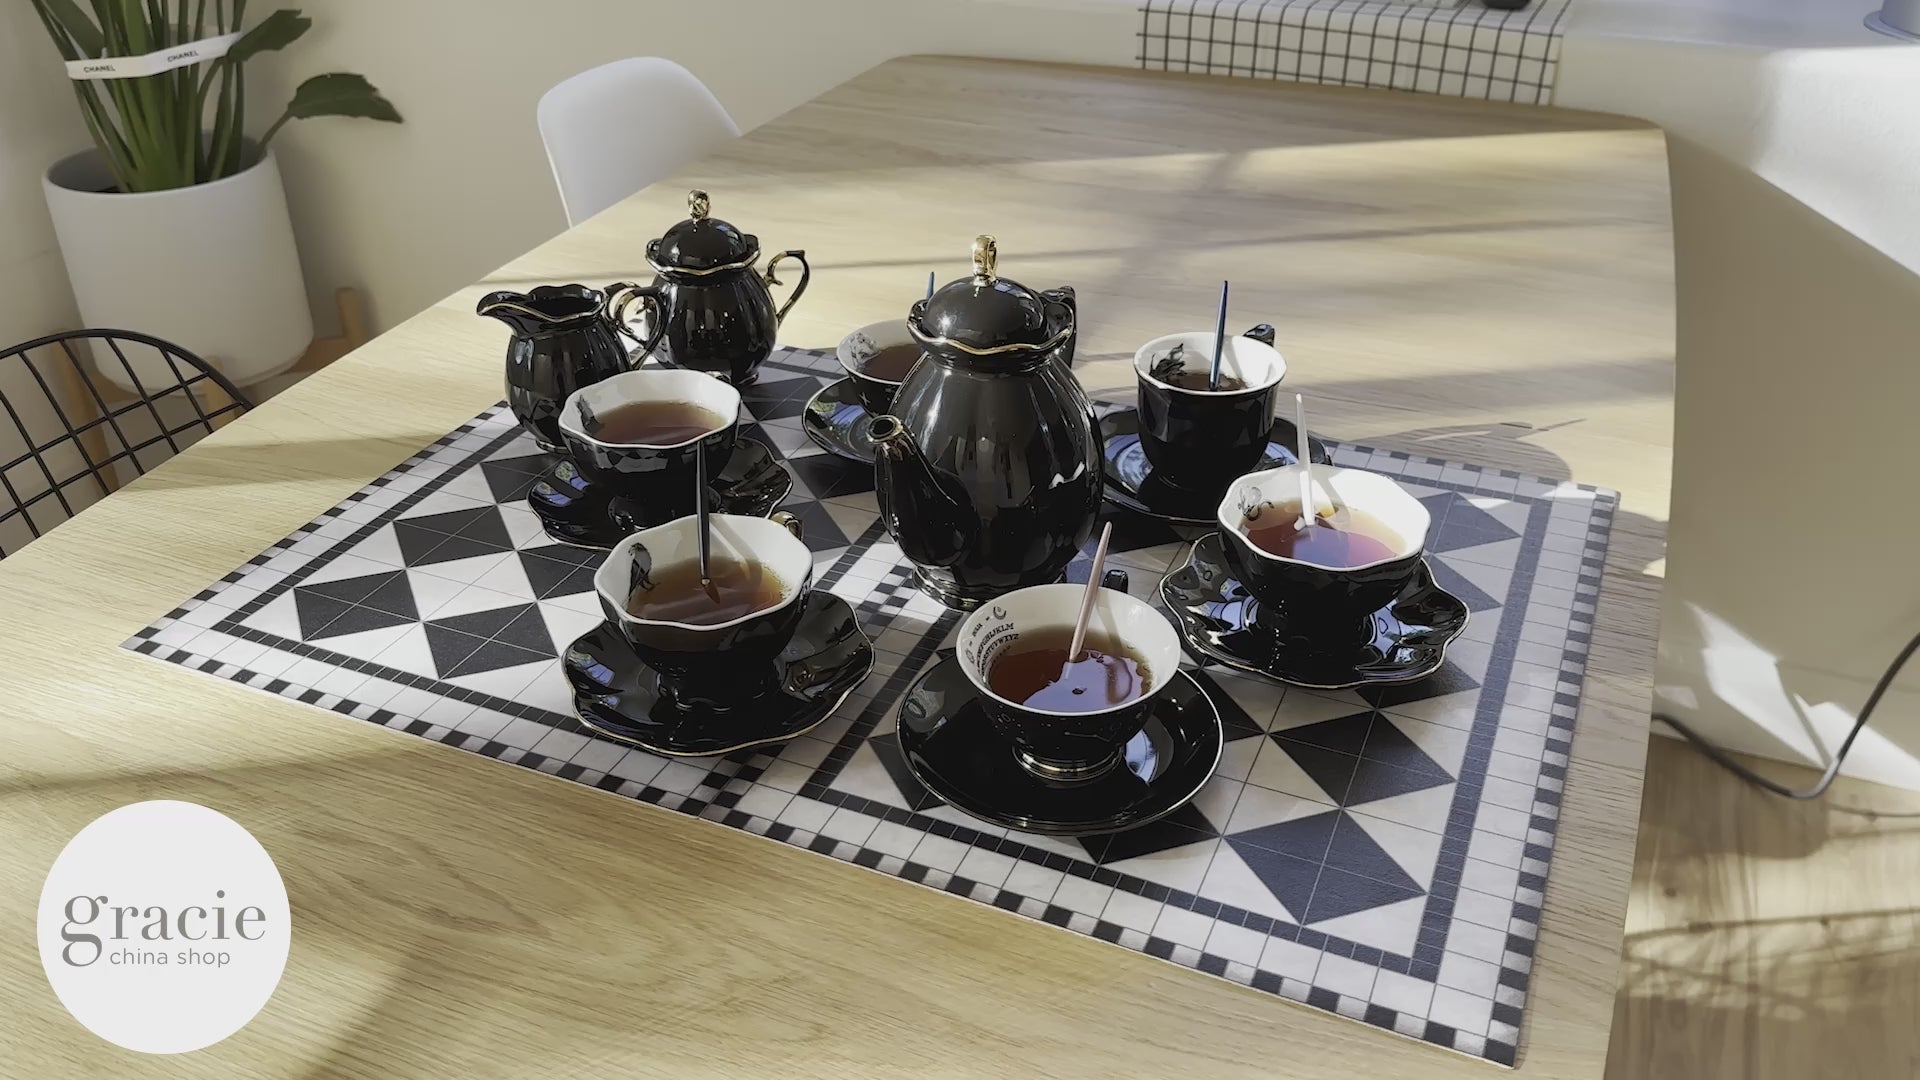 Large tea gift case (teapot, creamer, sugar bowl, 6 tea cups and saucers)  Tea Gift sets